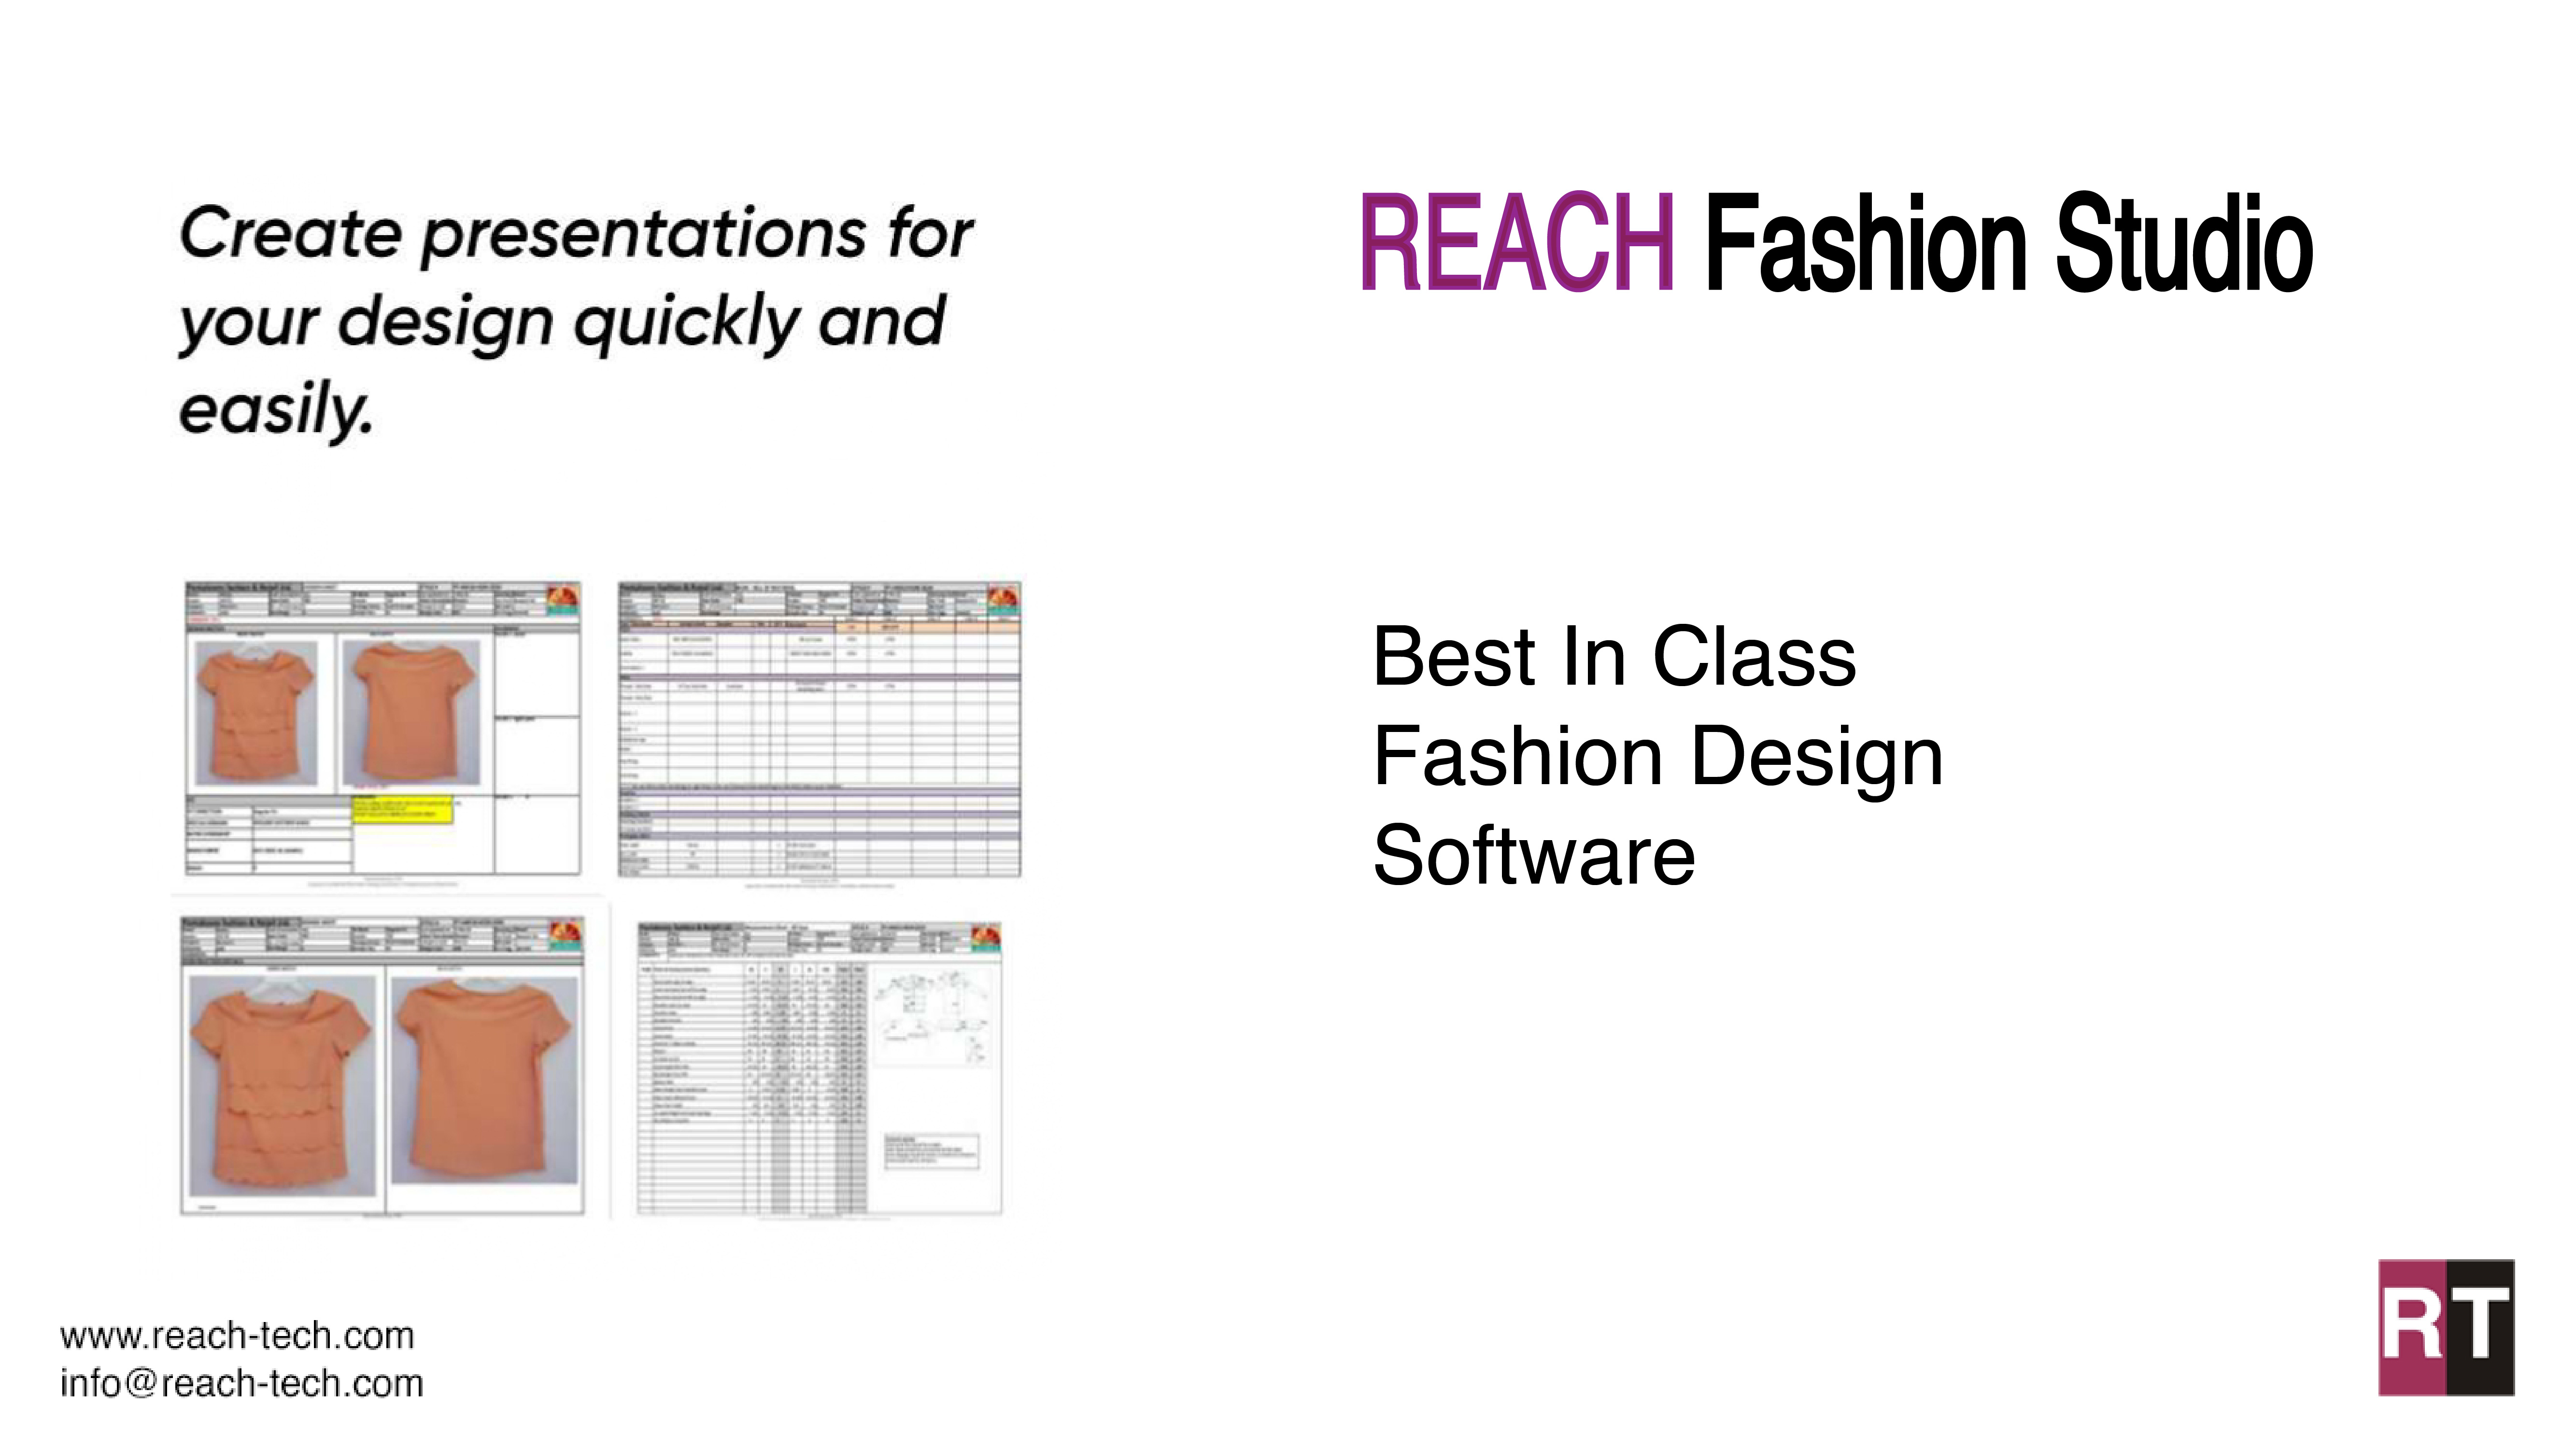 Reach Fashion Studio poster Image 06